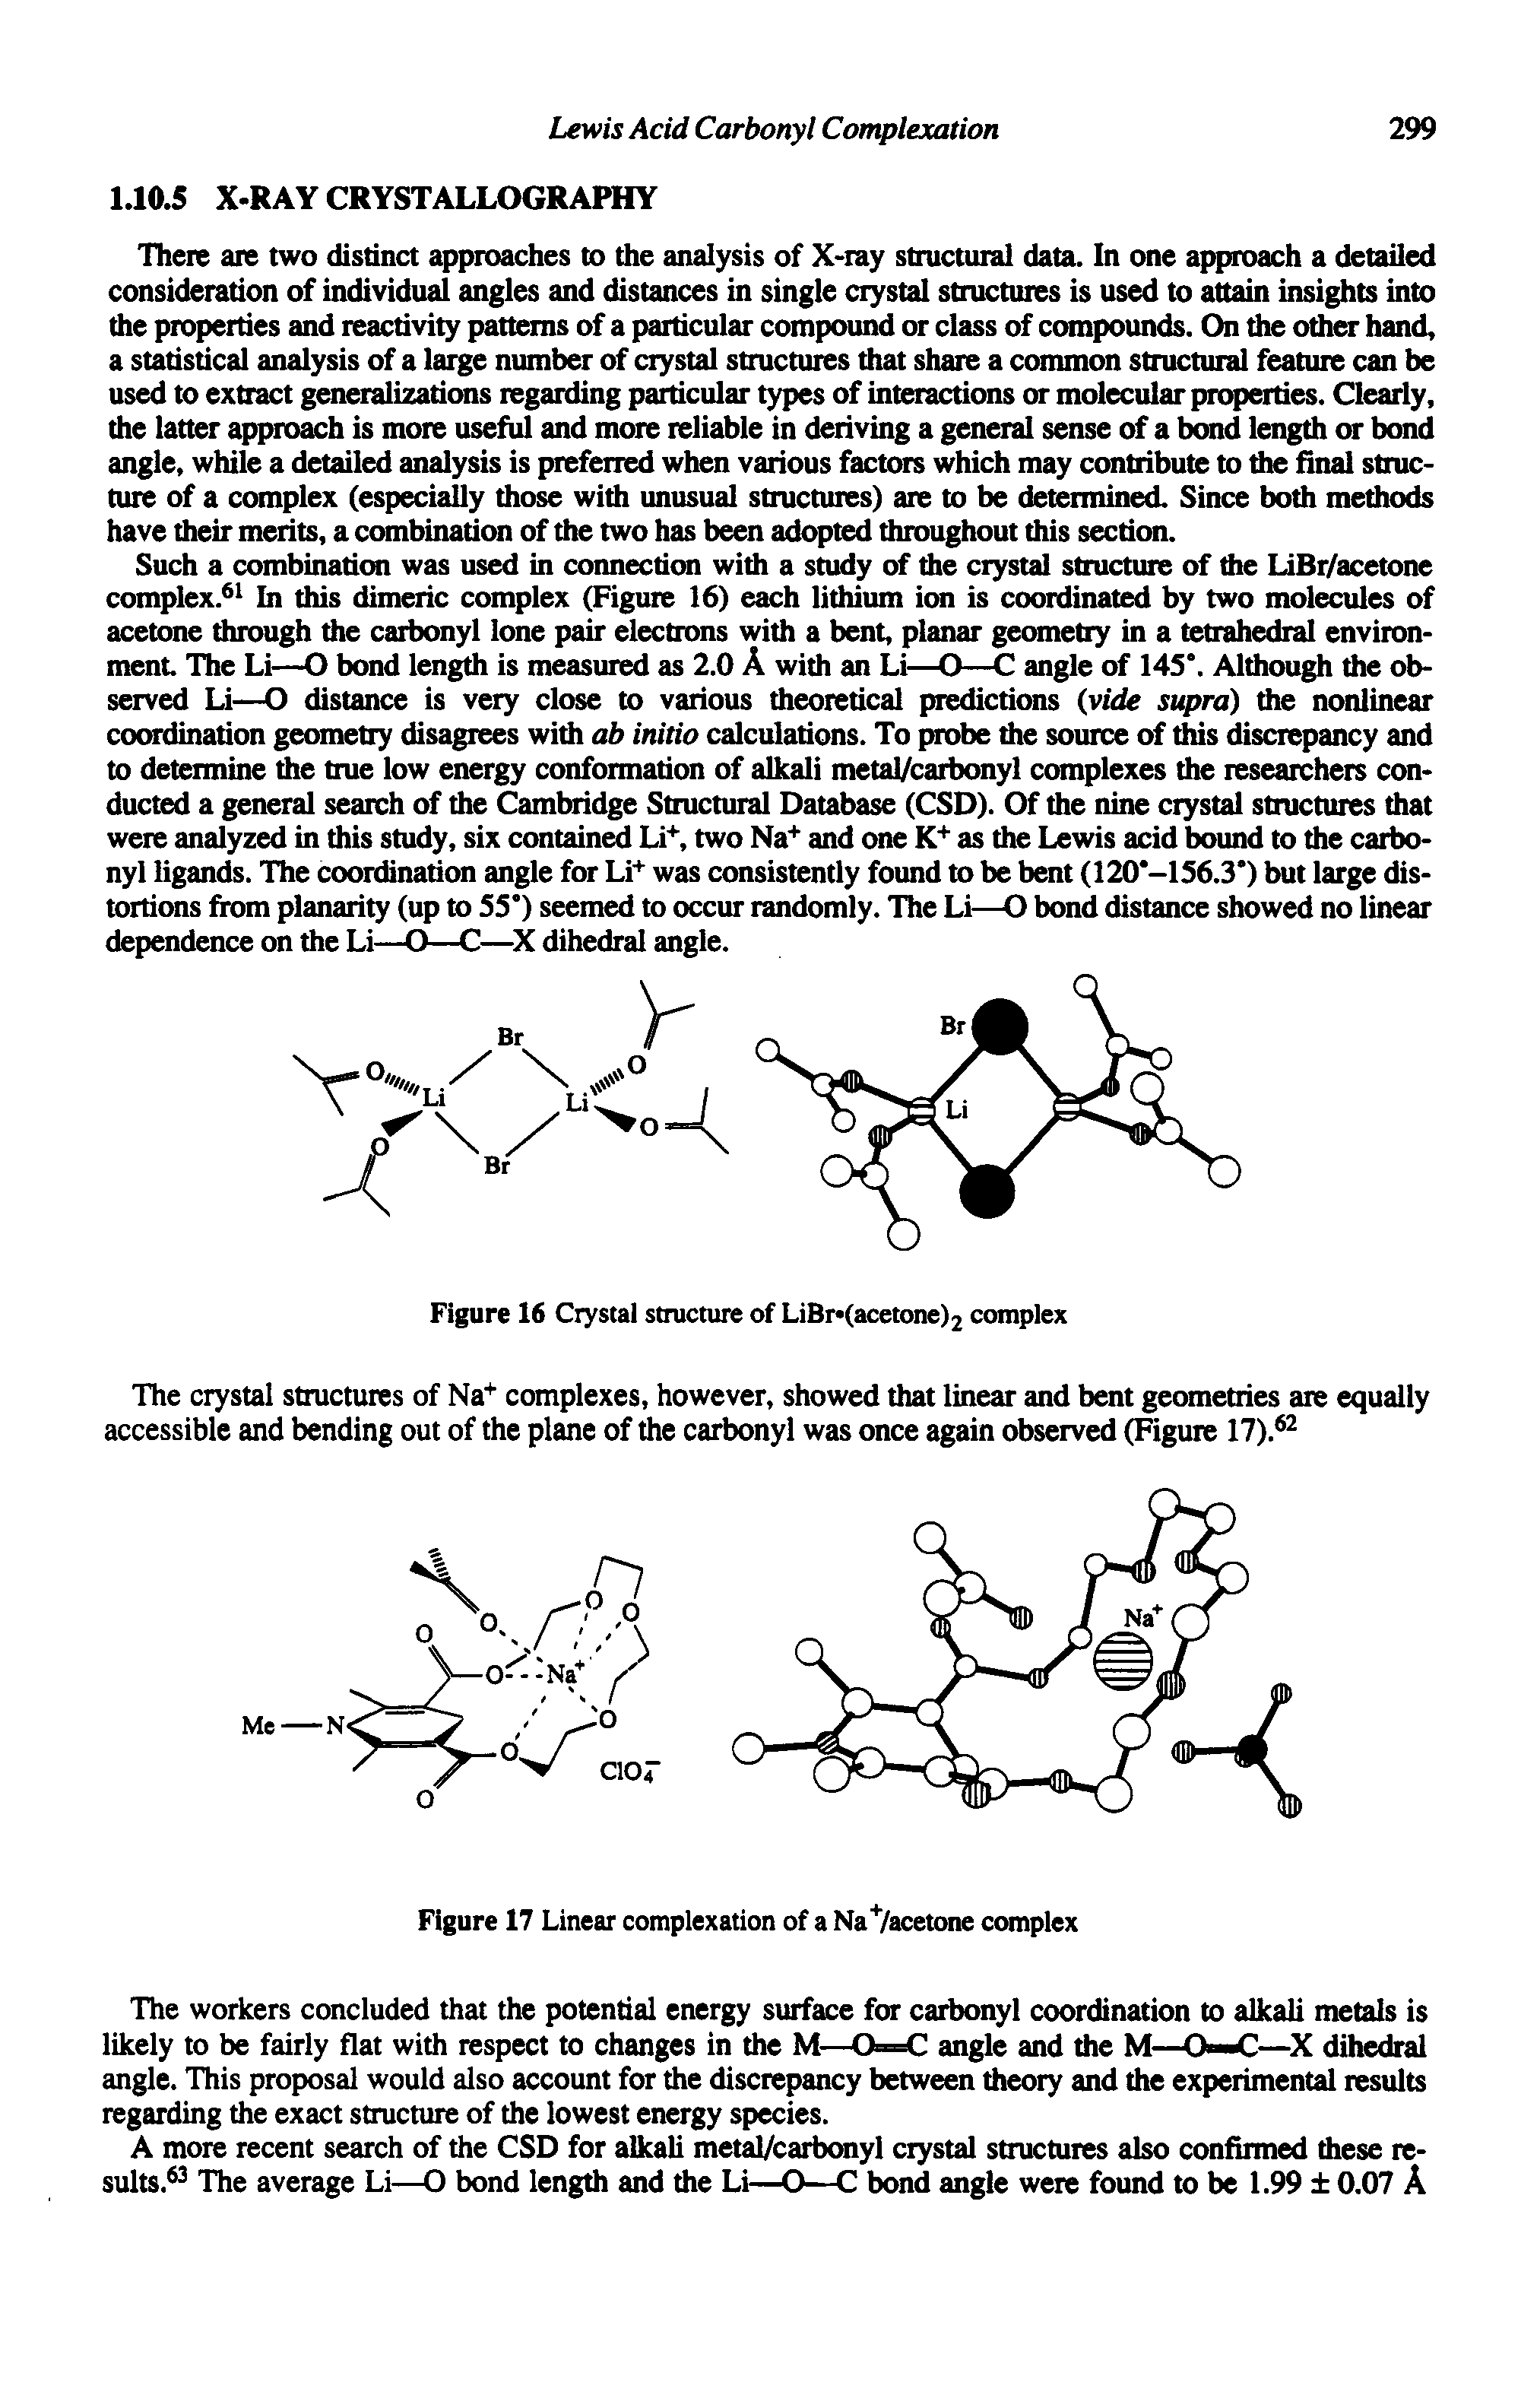 Figure 16 Crystal structure of LiBr (acetane)2 complex...